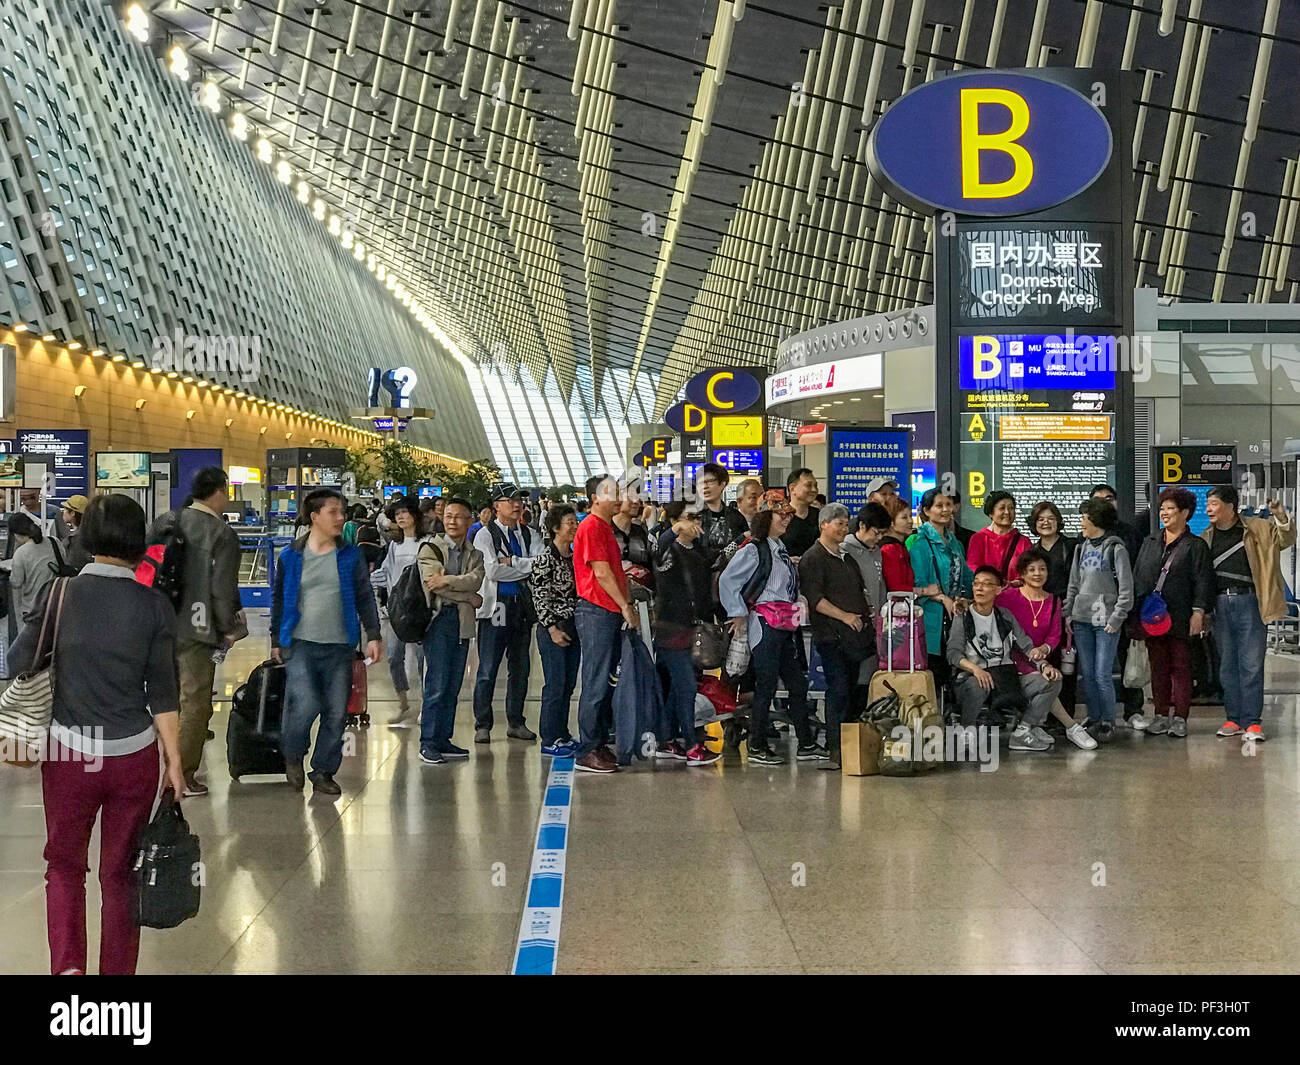 Shanghai, Jiangsu, China. Del aeropuerto Pudong de Shanghai, el hall de salidas. Foto de stock